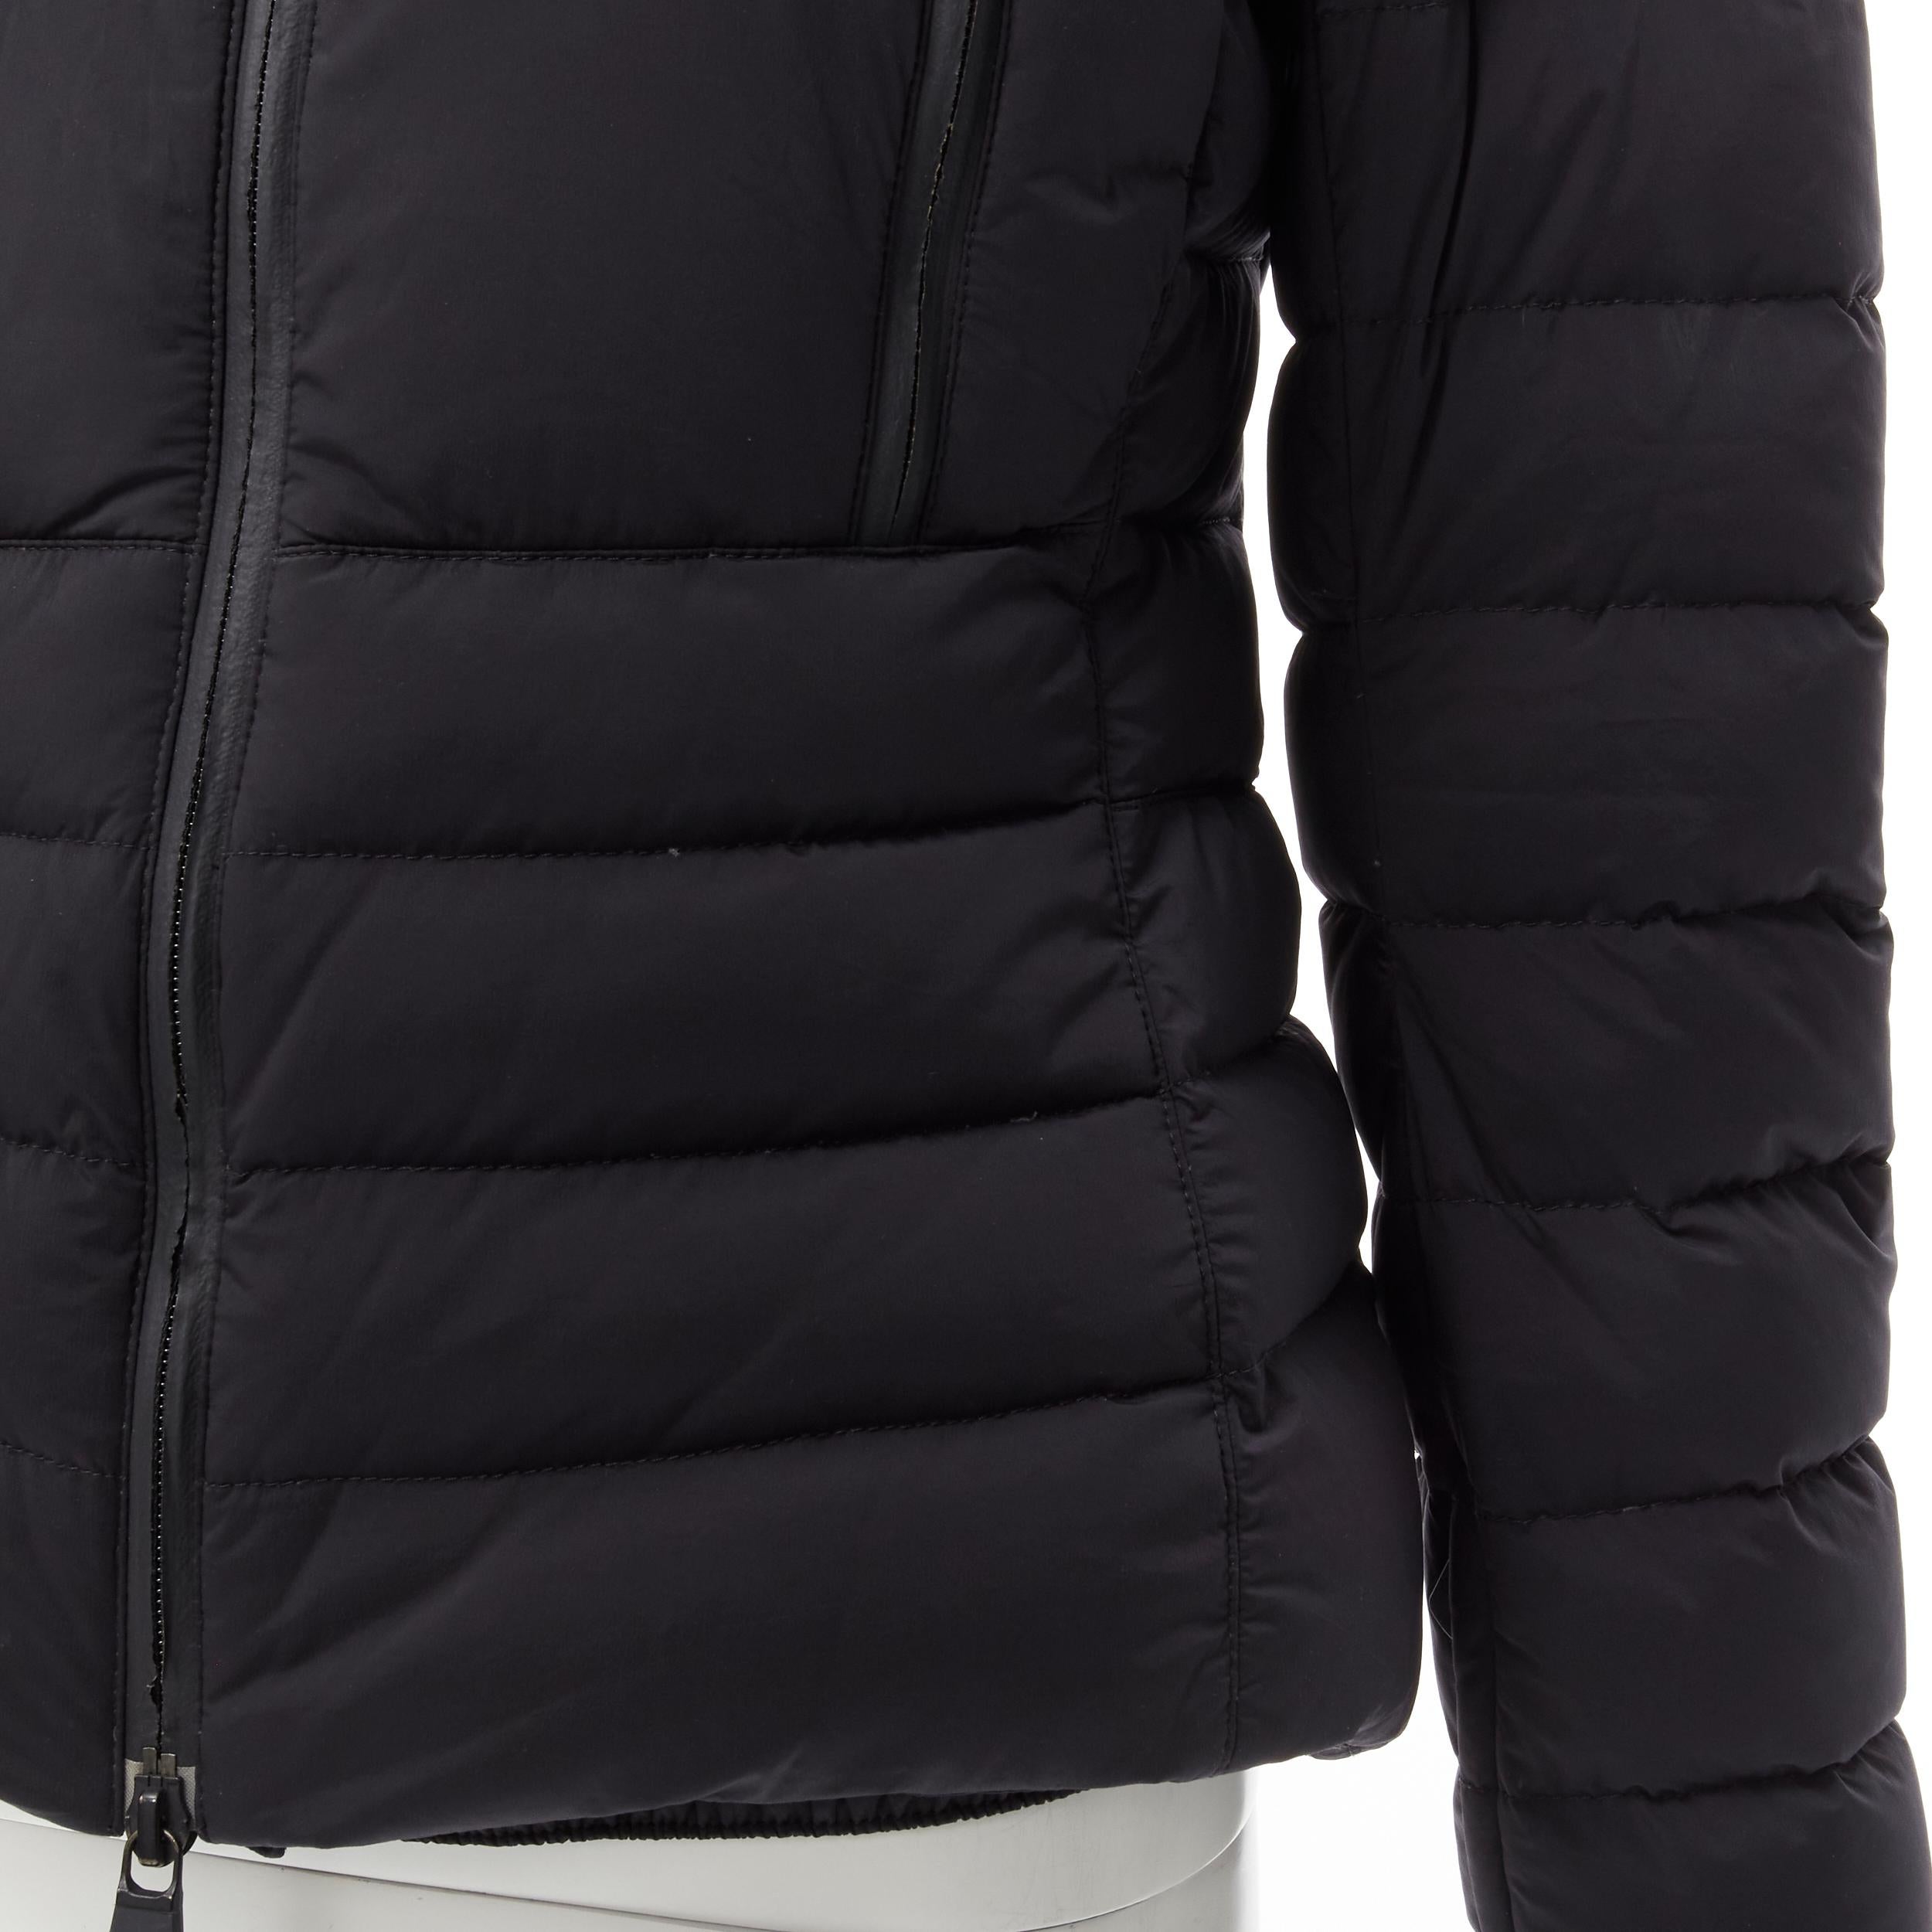 MONCLER GRENOBLE Bear Giubotto black nylon new down puffer jacket Size 1 S 2